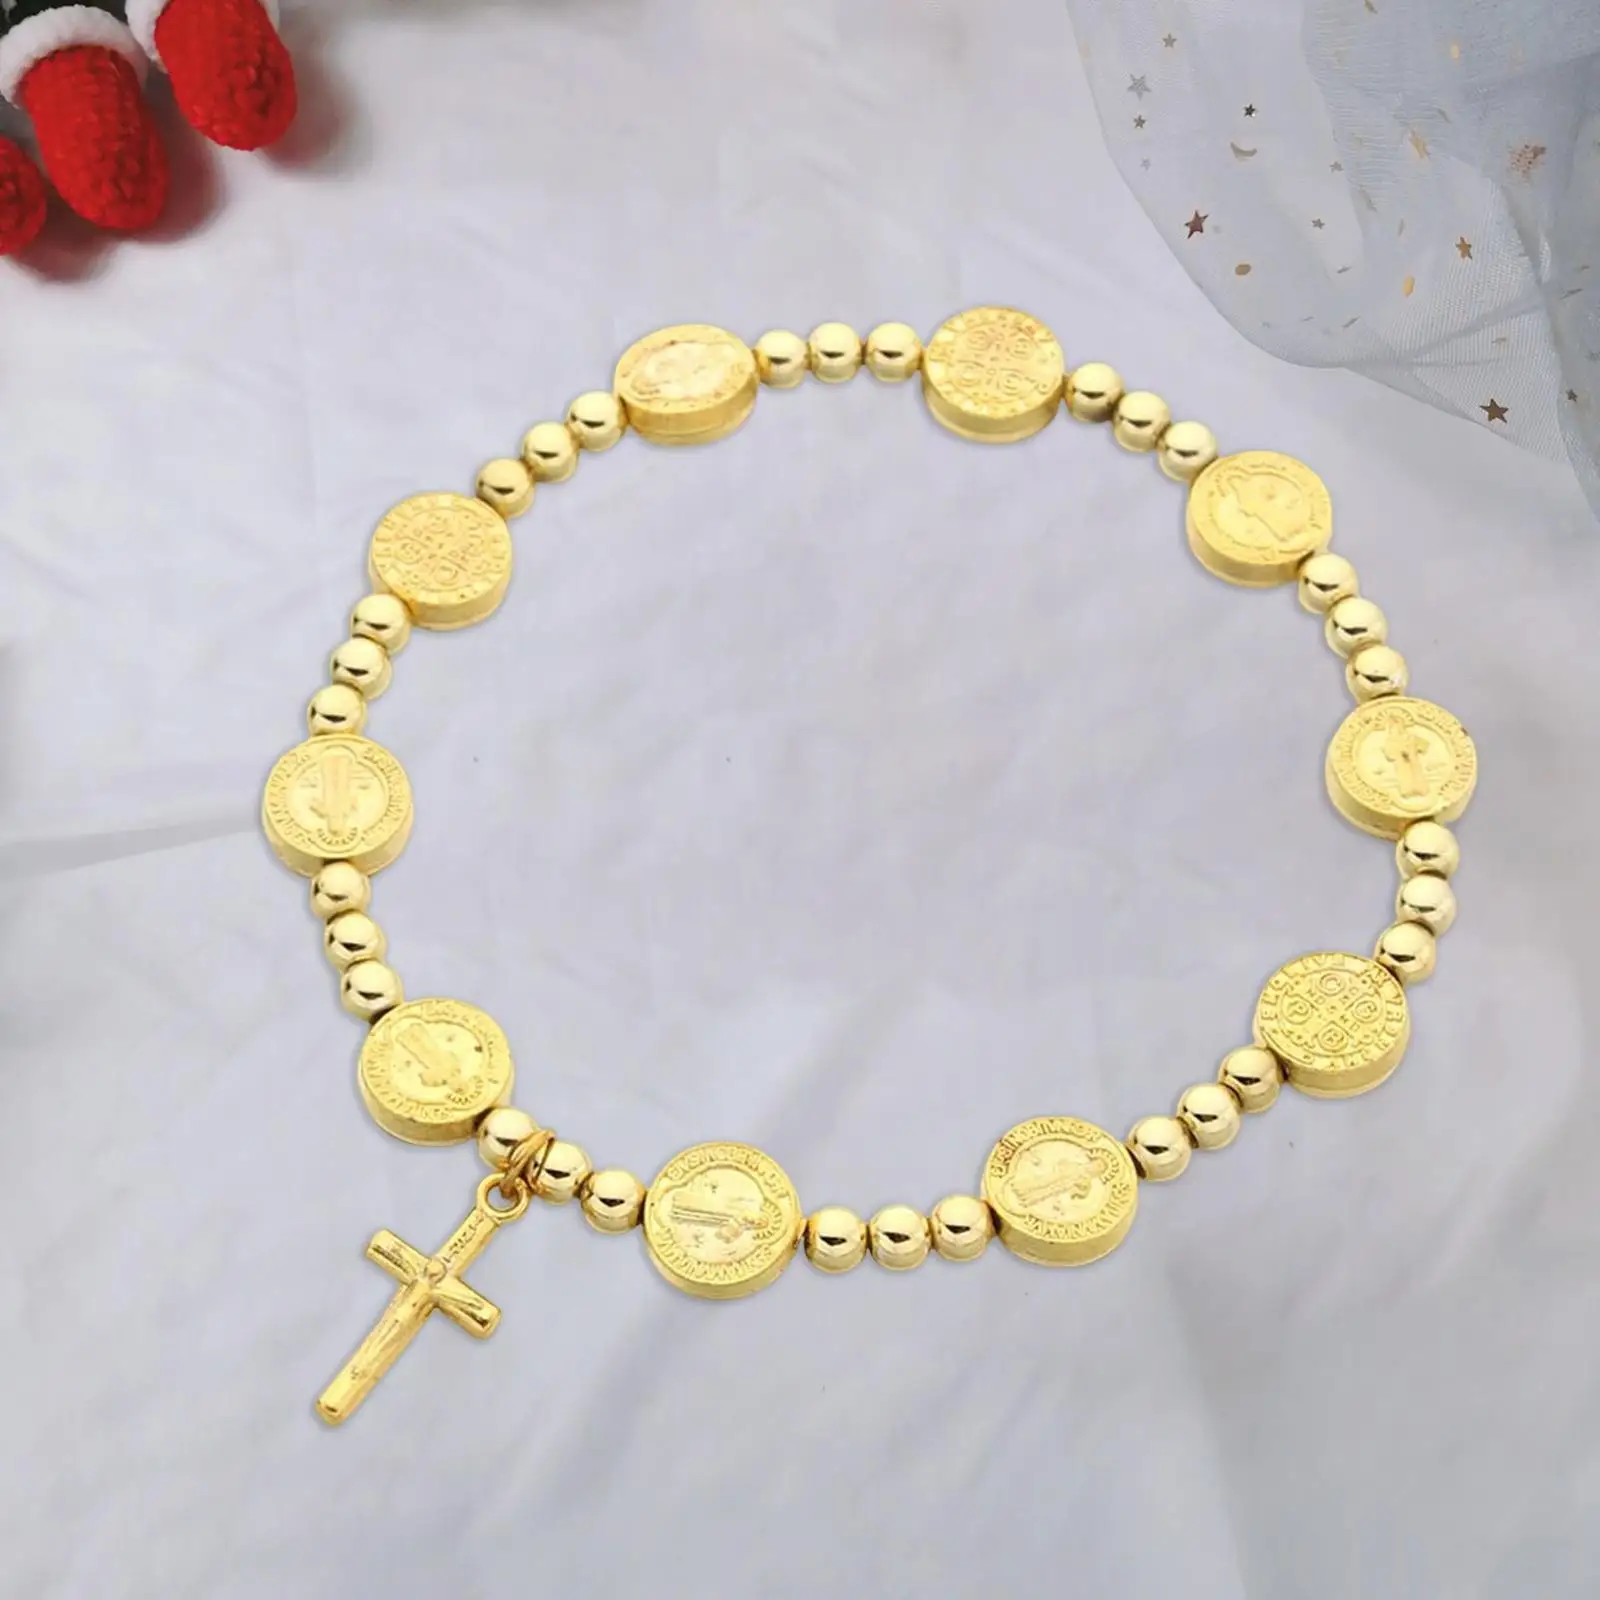 Aureate Cross Bracelet Cross Pendants for Wedding Confirmation Church Event Christening